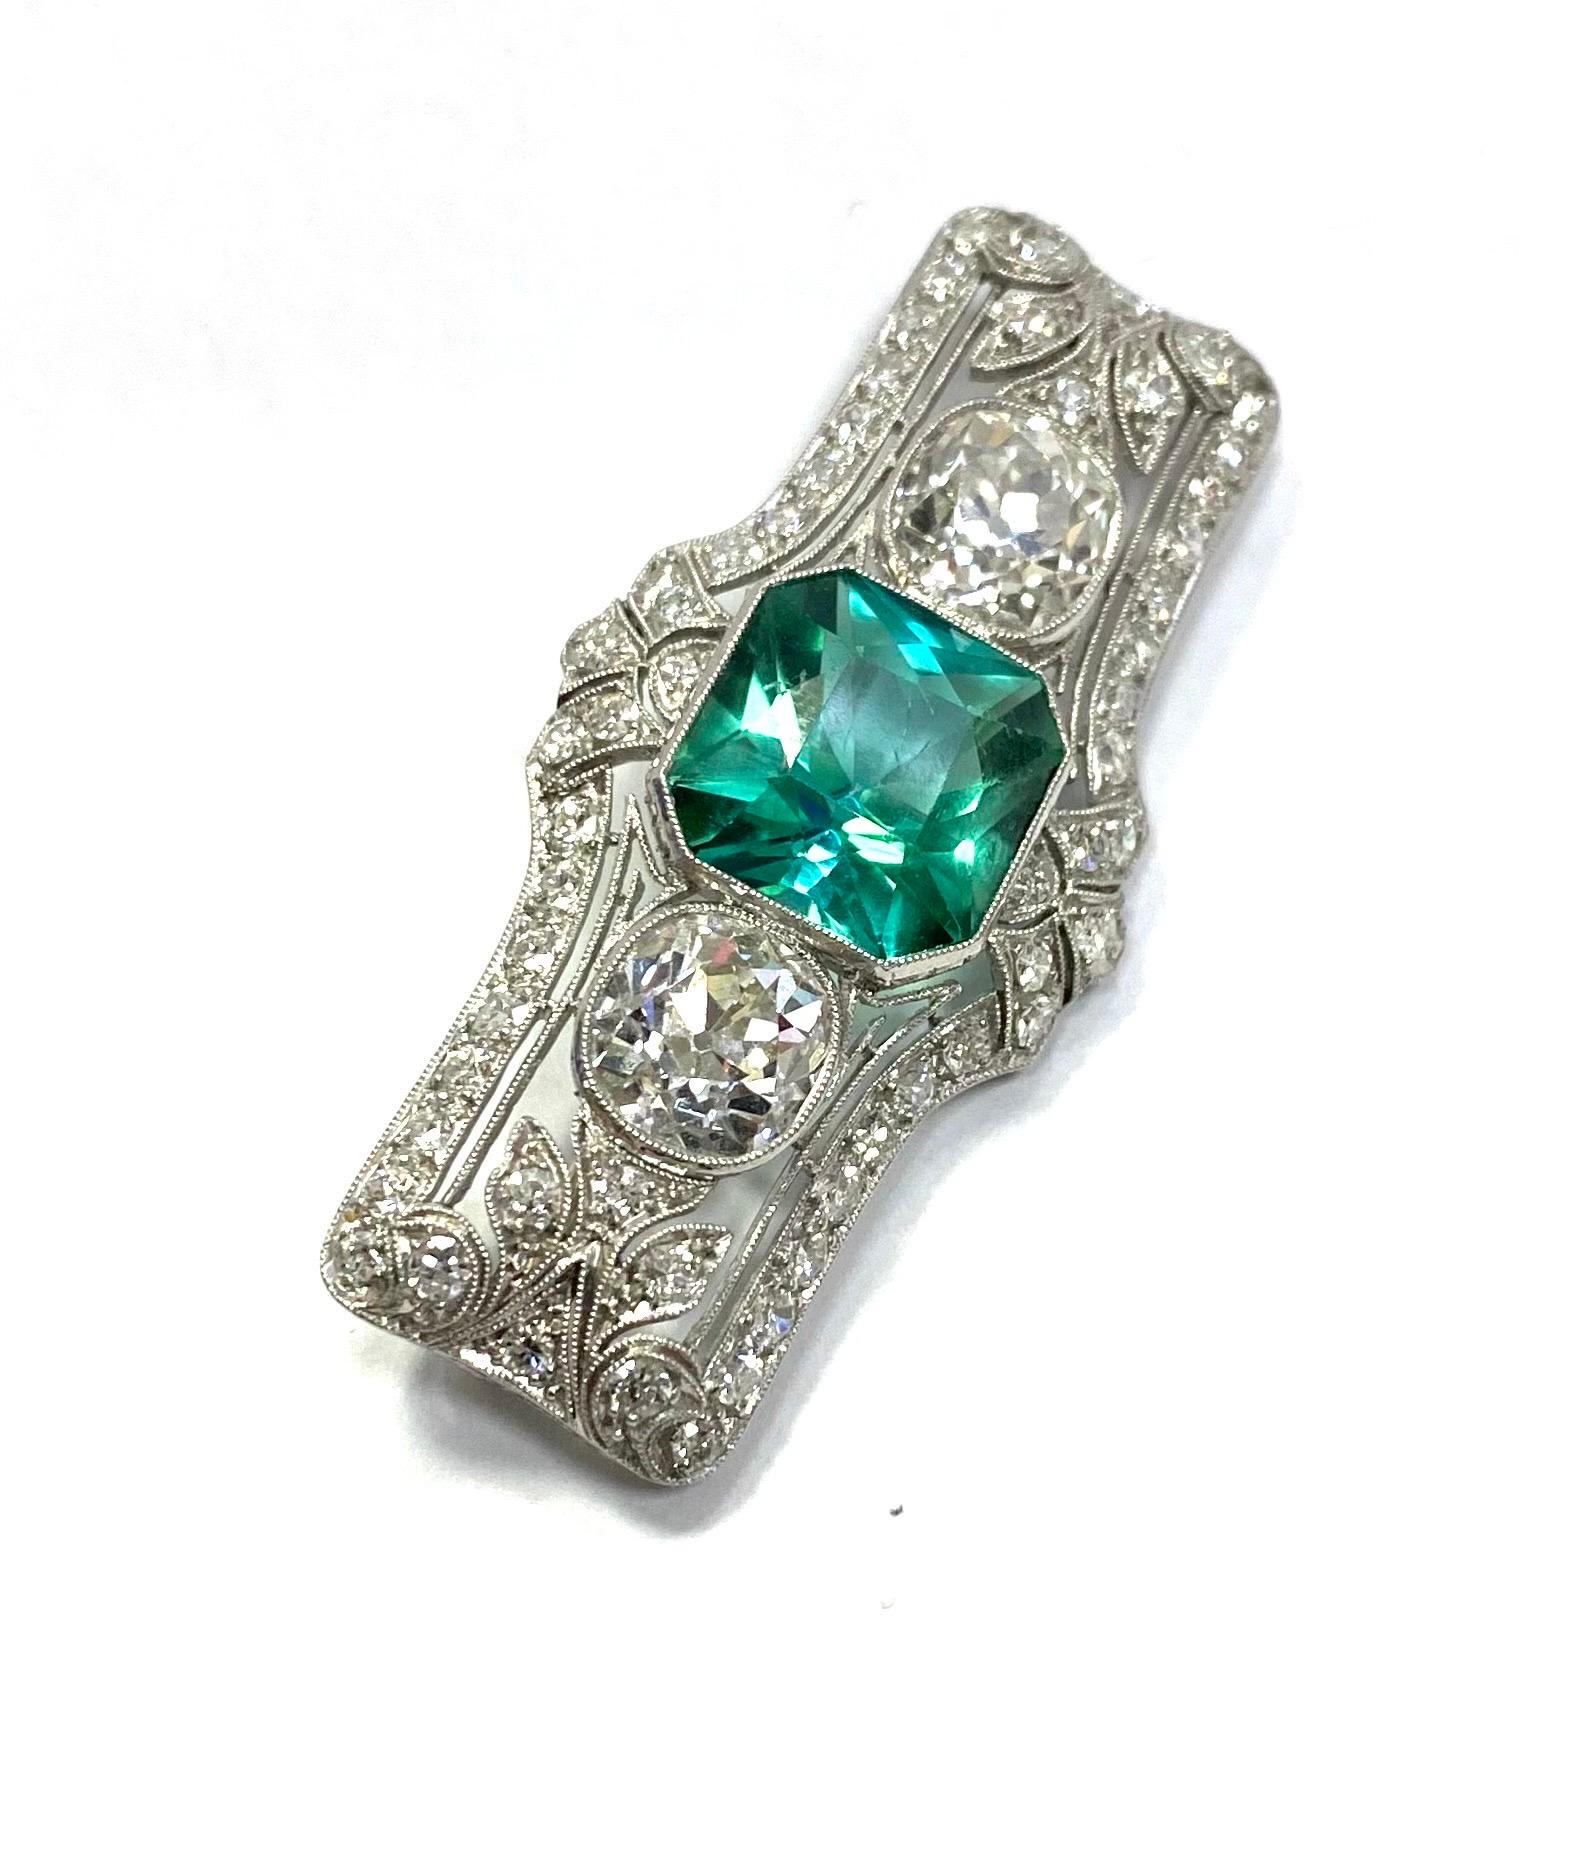 Antique Platinum Tourmaline and Вiamonds Brooch
Period: Circa 1920-1930
Big certified green tourmaline
Two big diamonds: Over 2cts each
Small Diamonds: 1.6ctw
F-G color, VVS